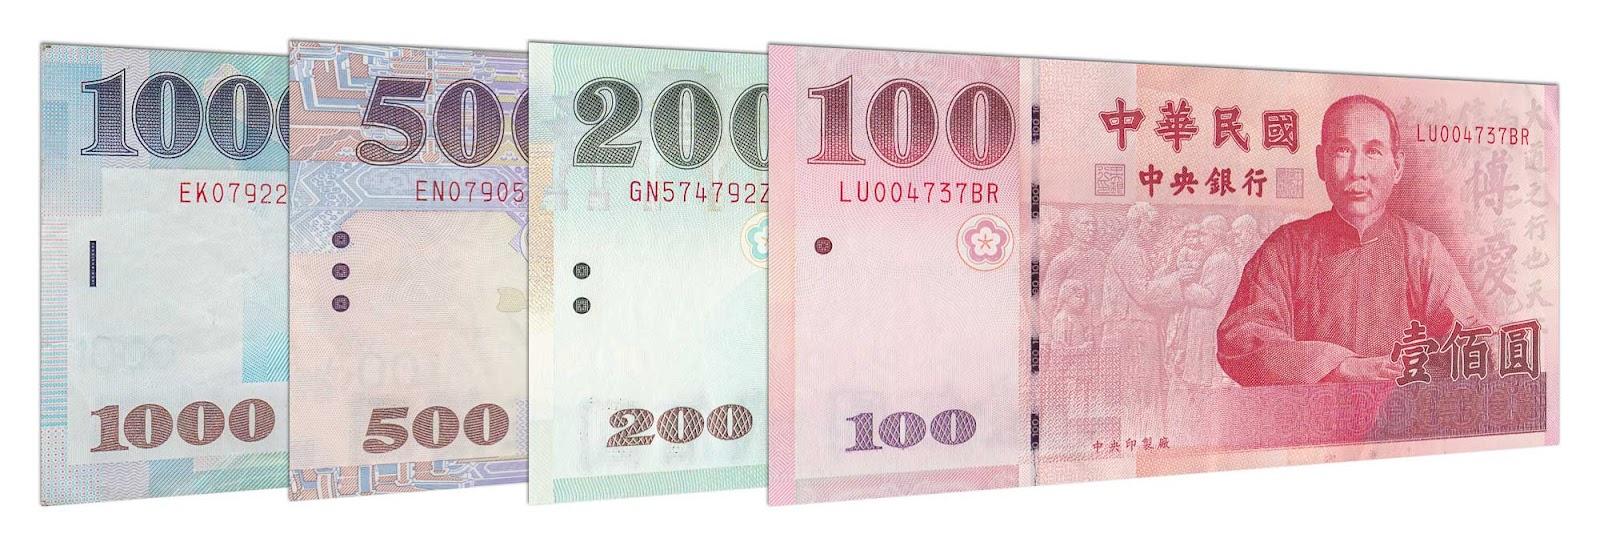 New Taiwan Dollar banknote series